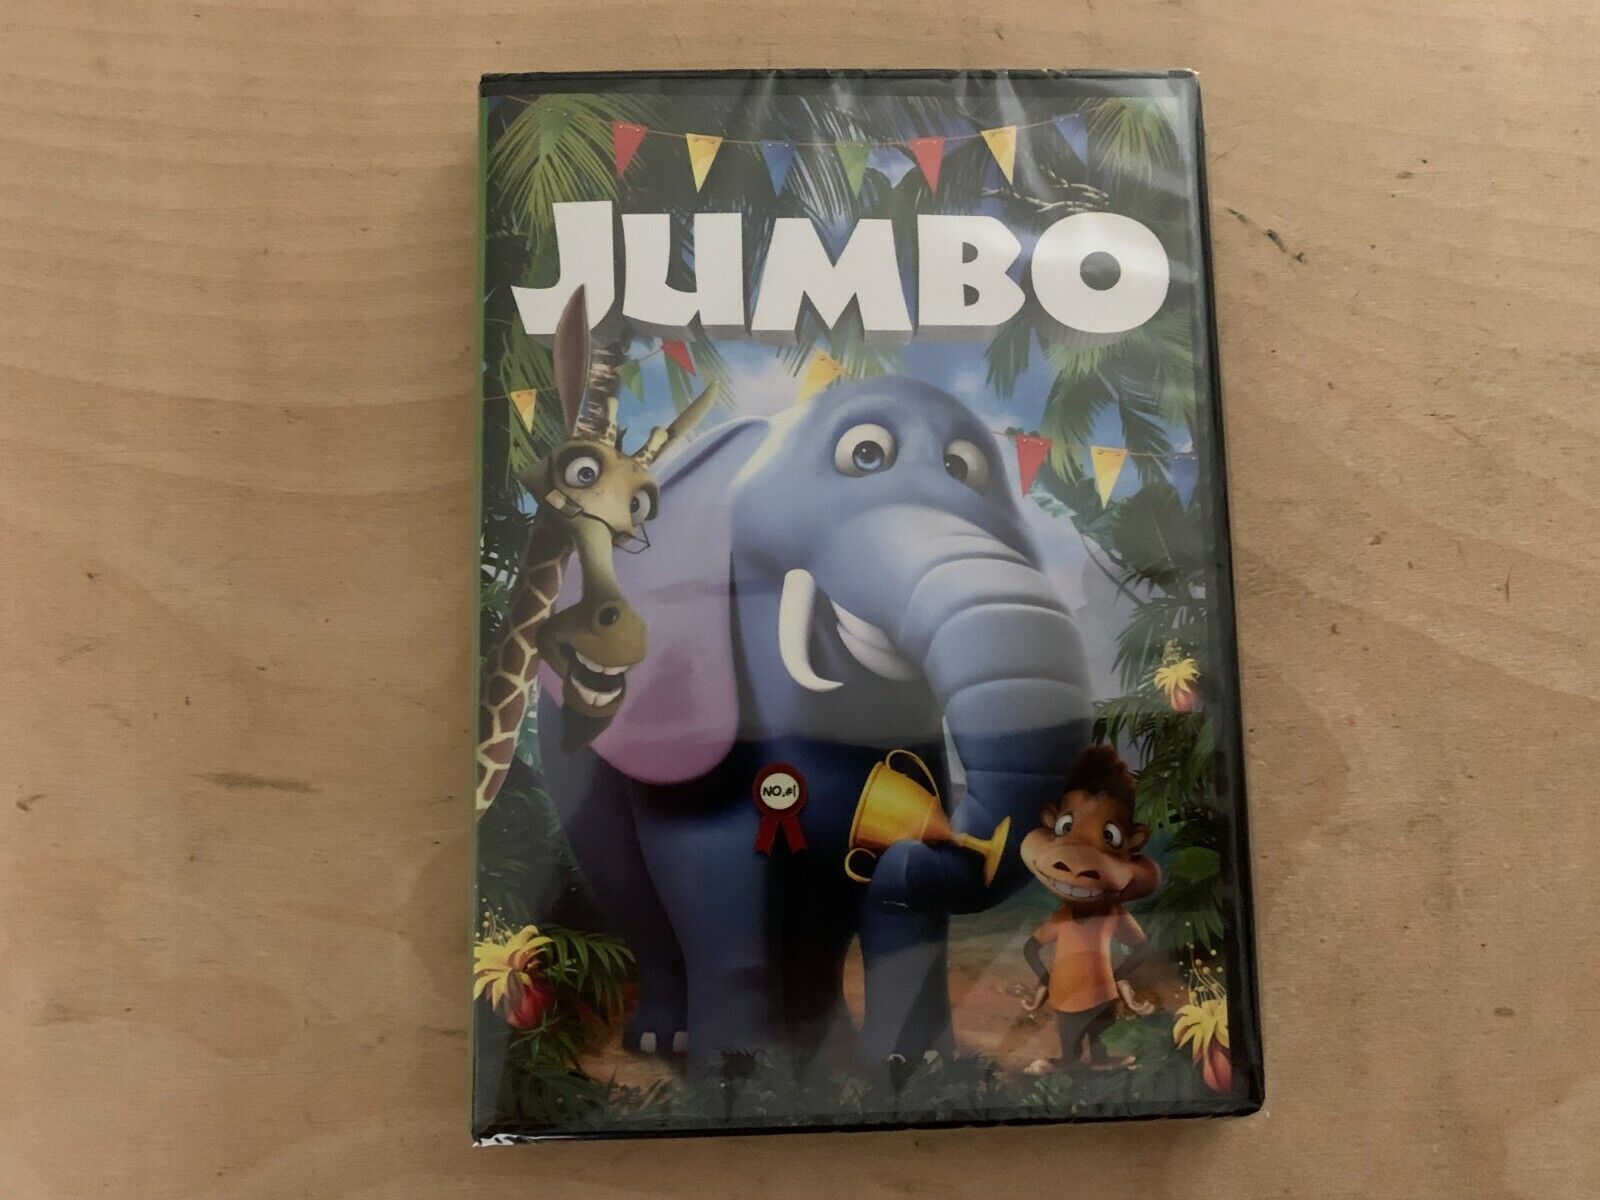 Jumbo [DVD, 2019] Jumbo the Elephant Animated Kids Movie 828706545461 | eBay